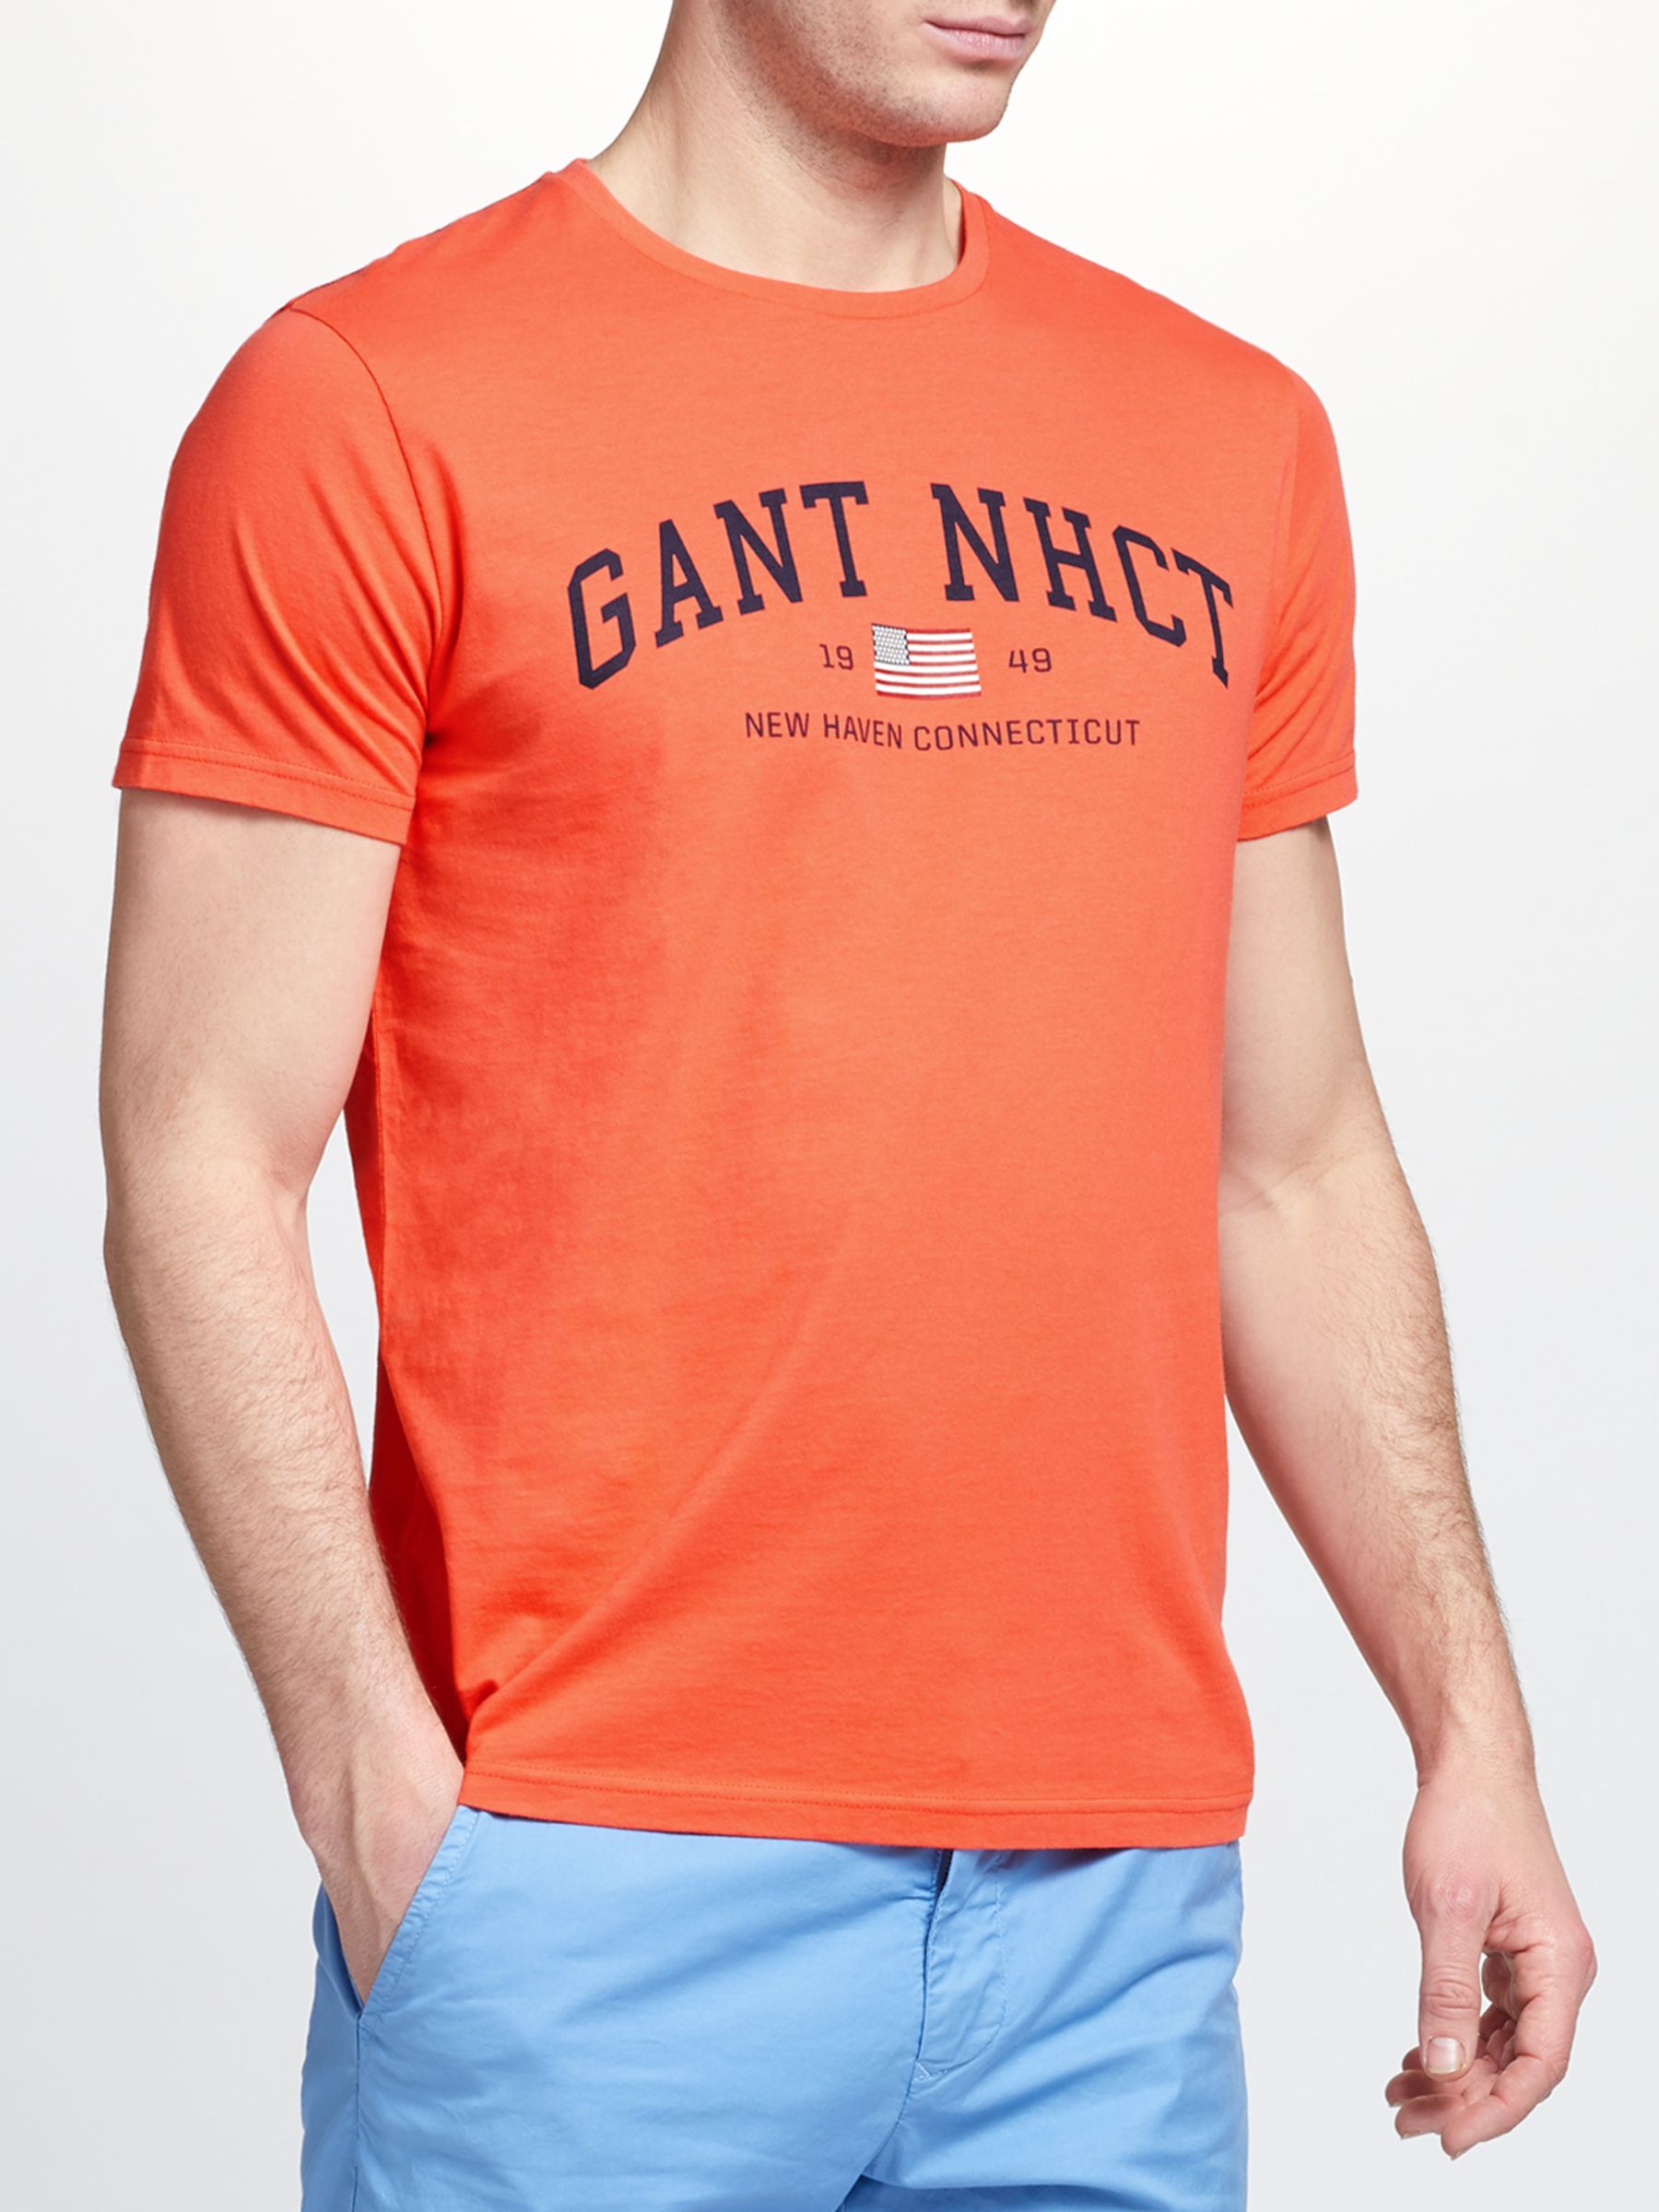 GANT NHCT Cotton T-Shirt, Coral, XL